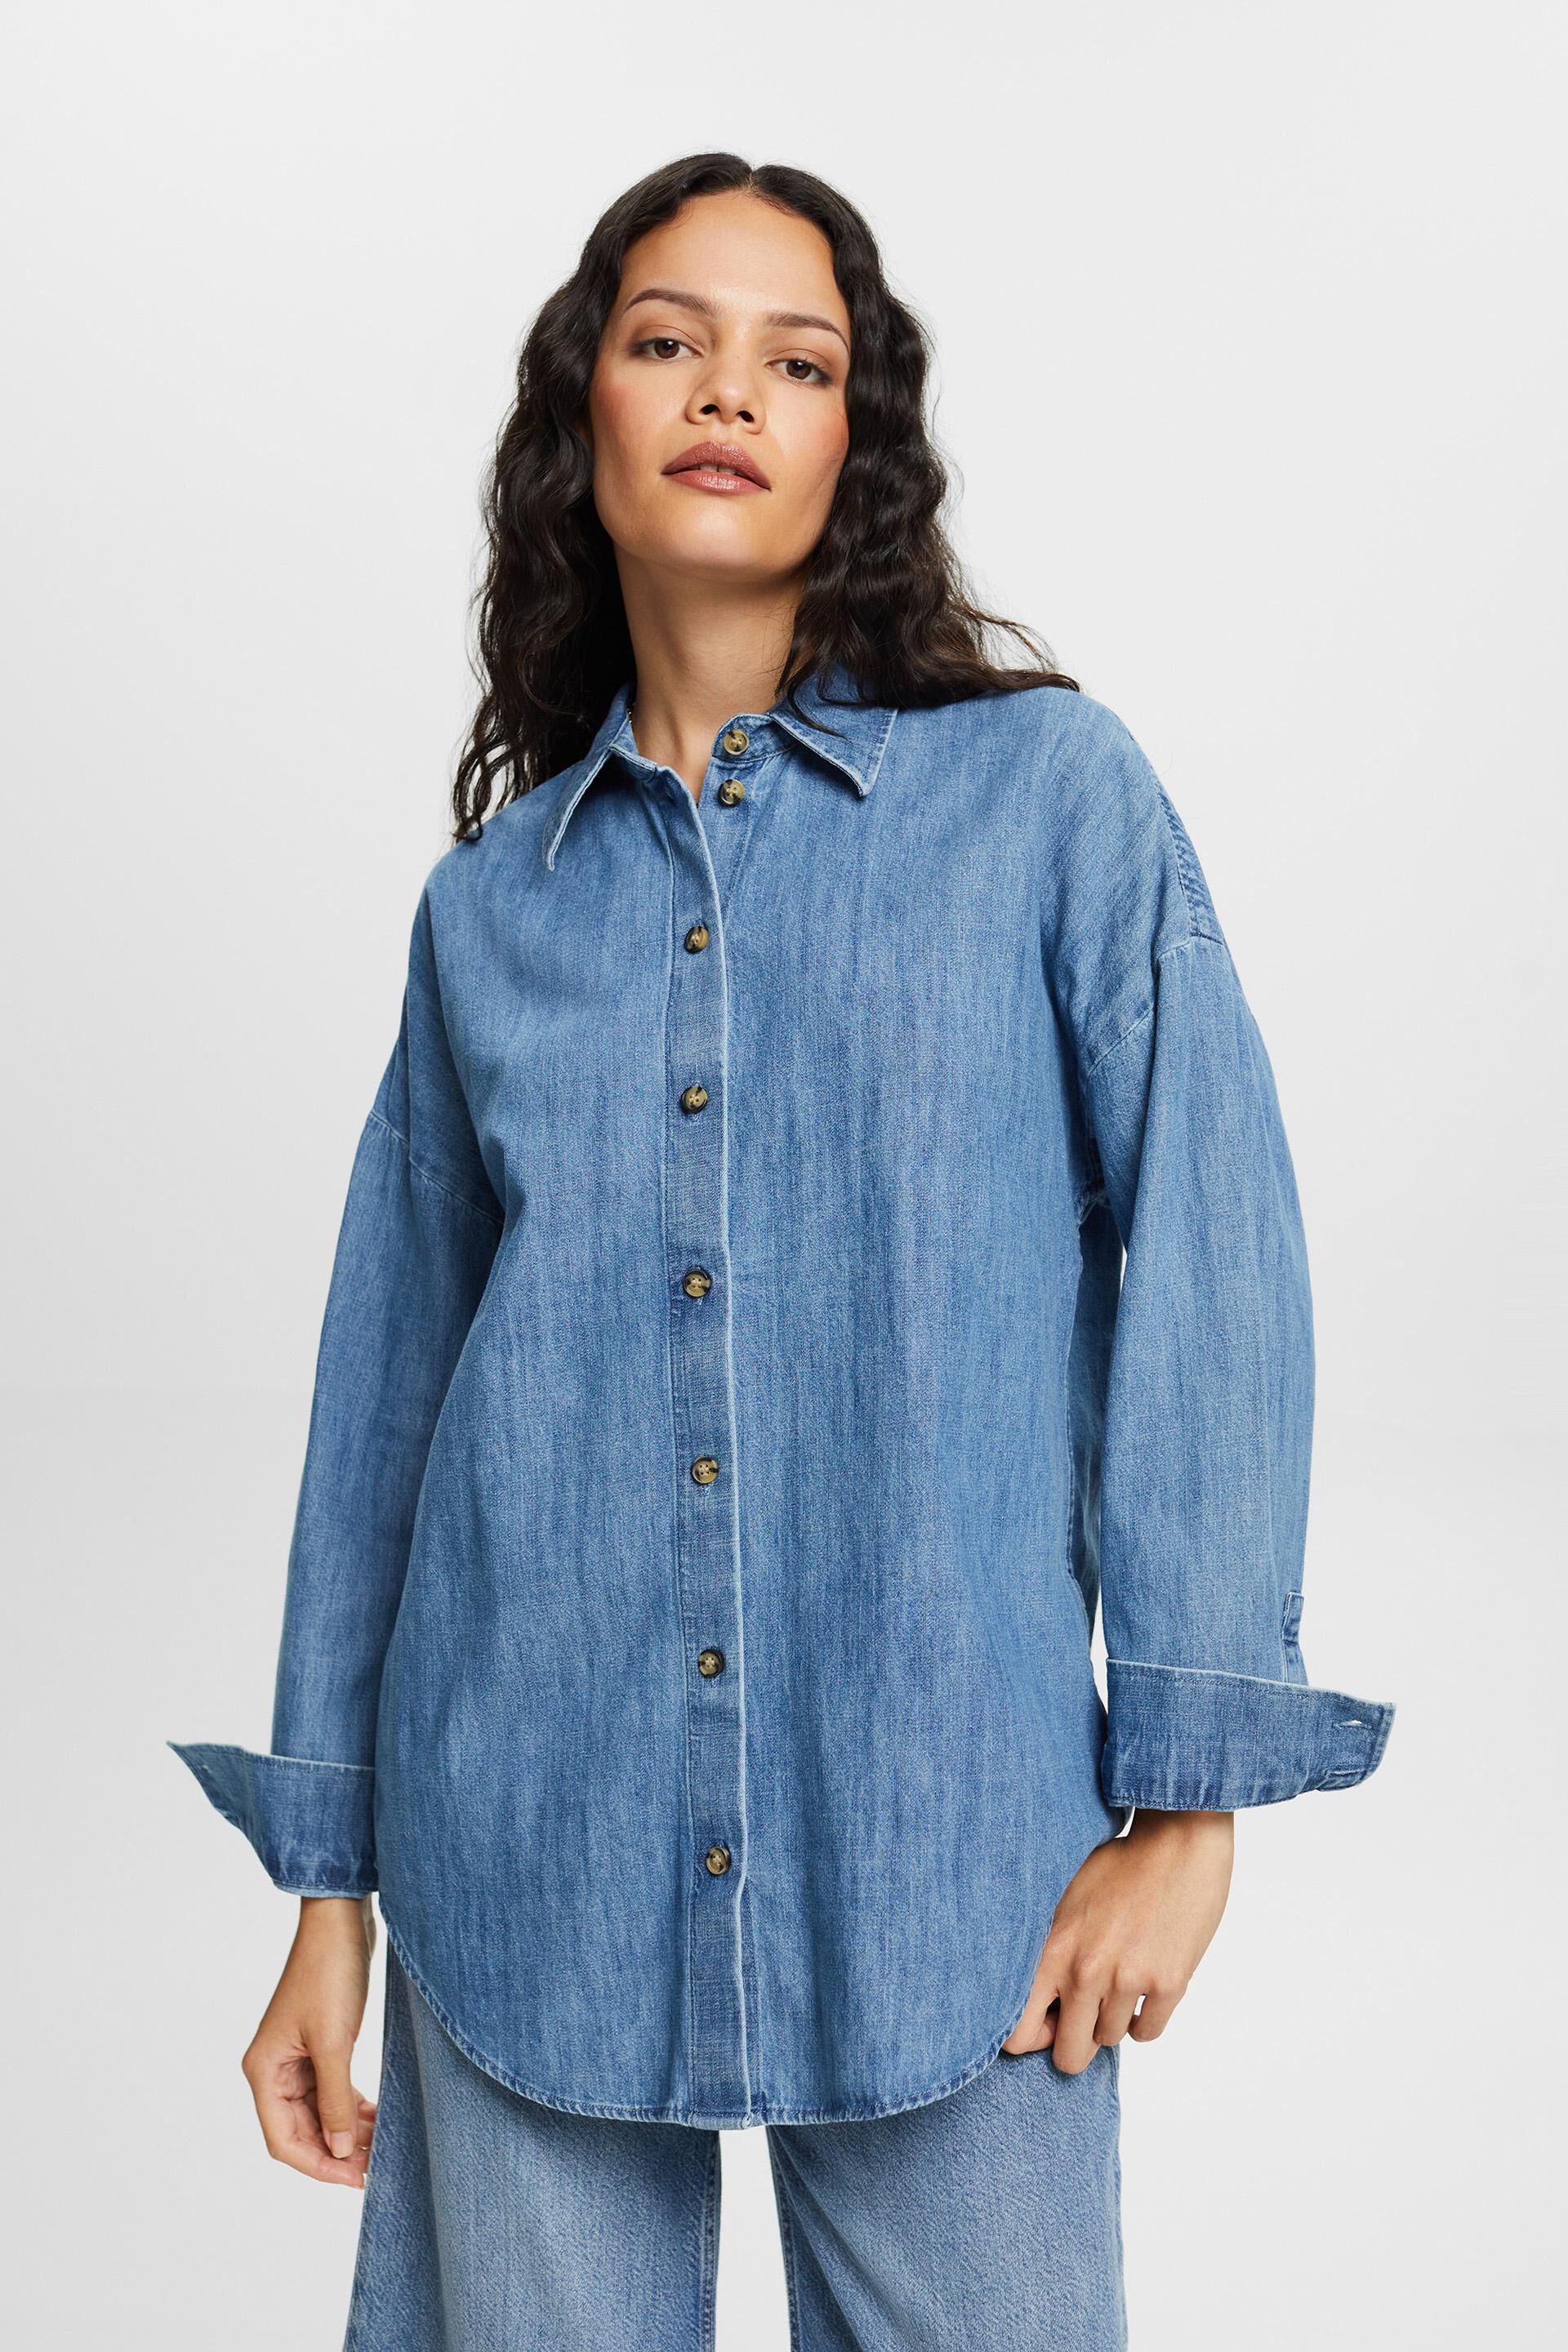 Denim & Co. Jean Shirt with Buttons 👚Size 10... - Depop